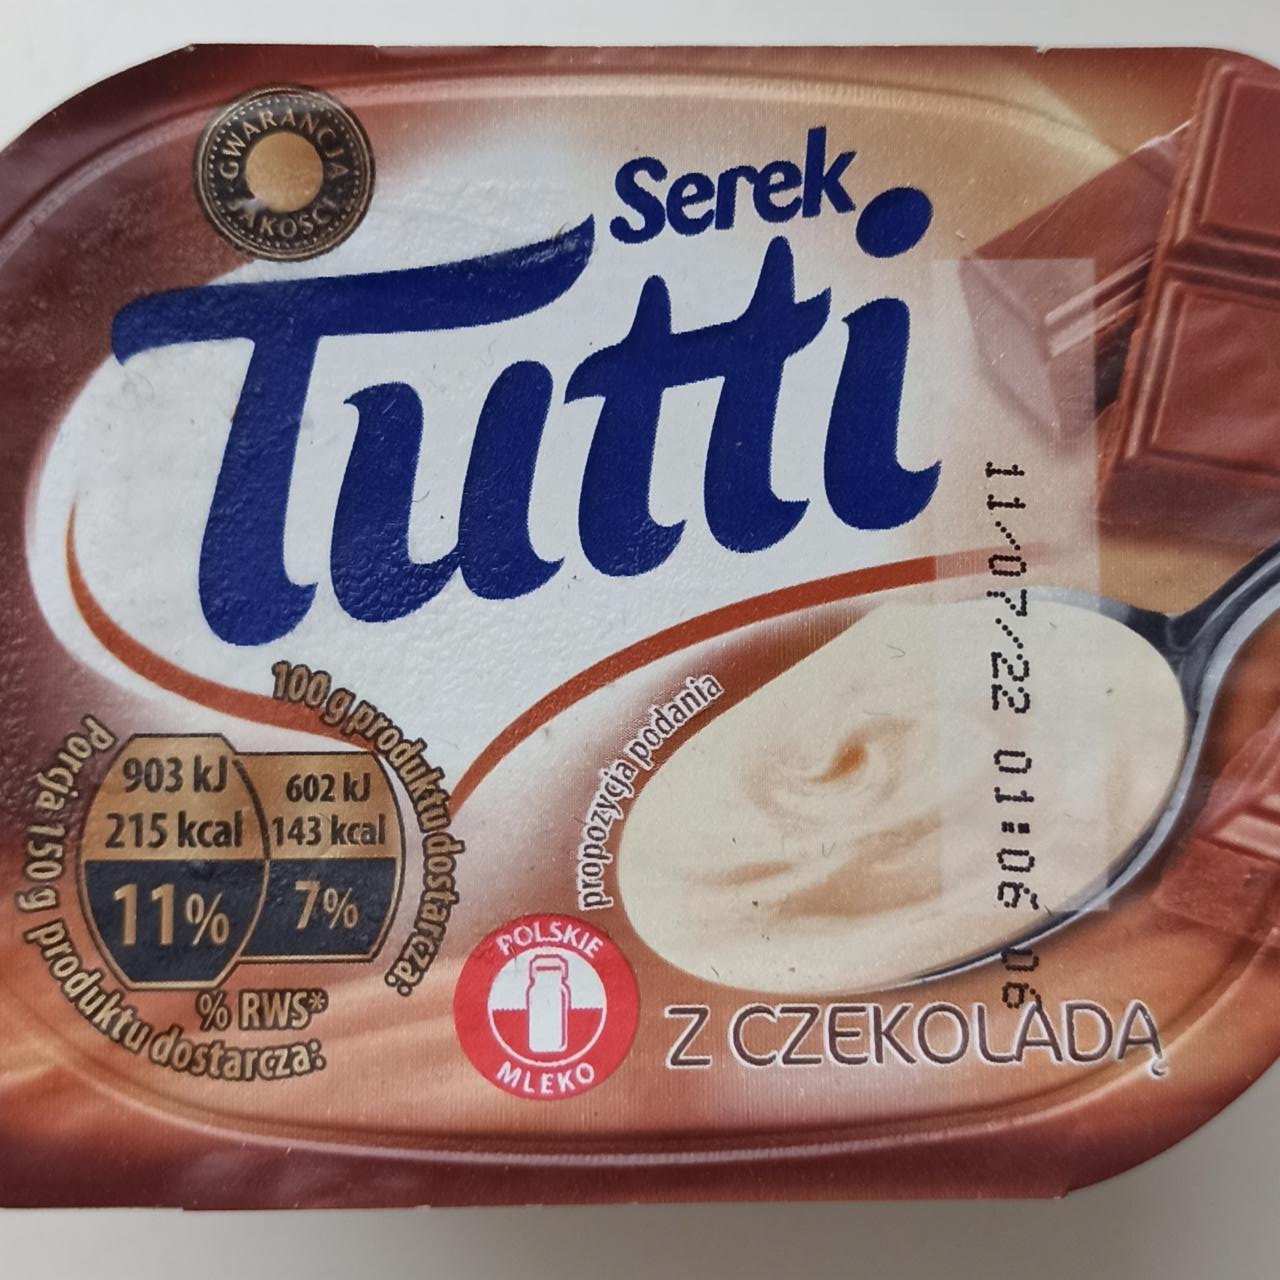 Фото - Serek z czekolada Tutti